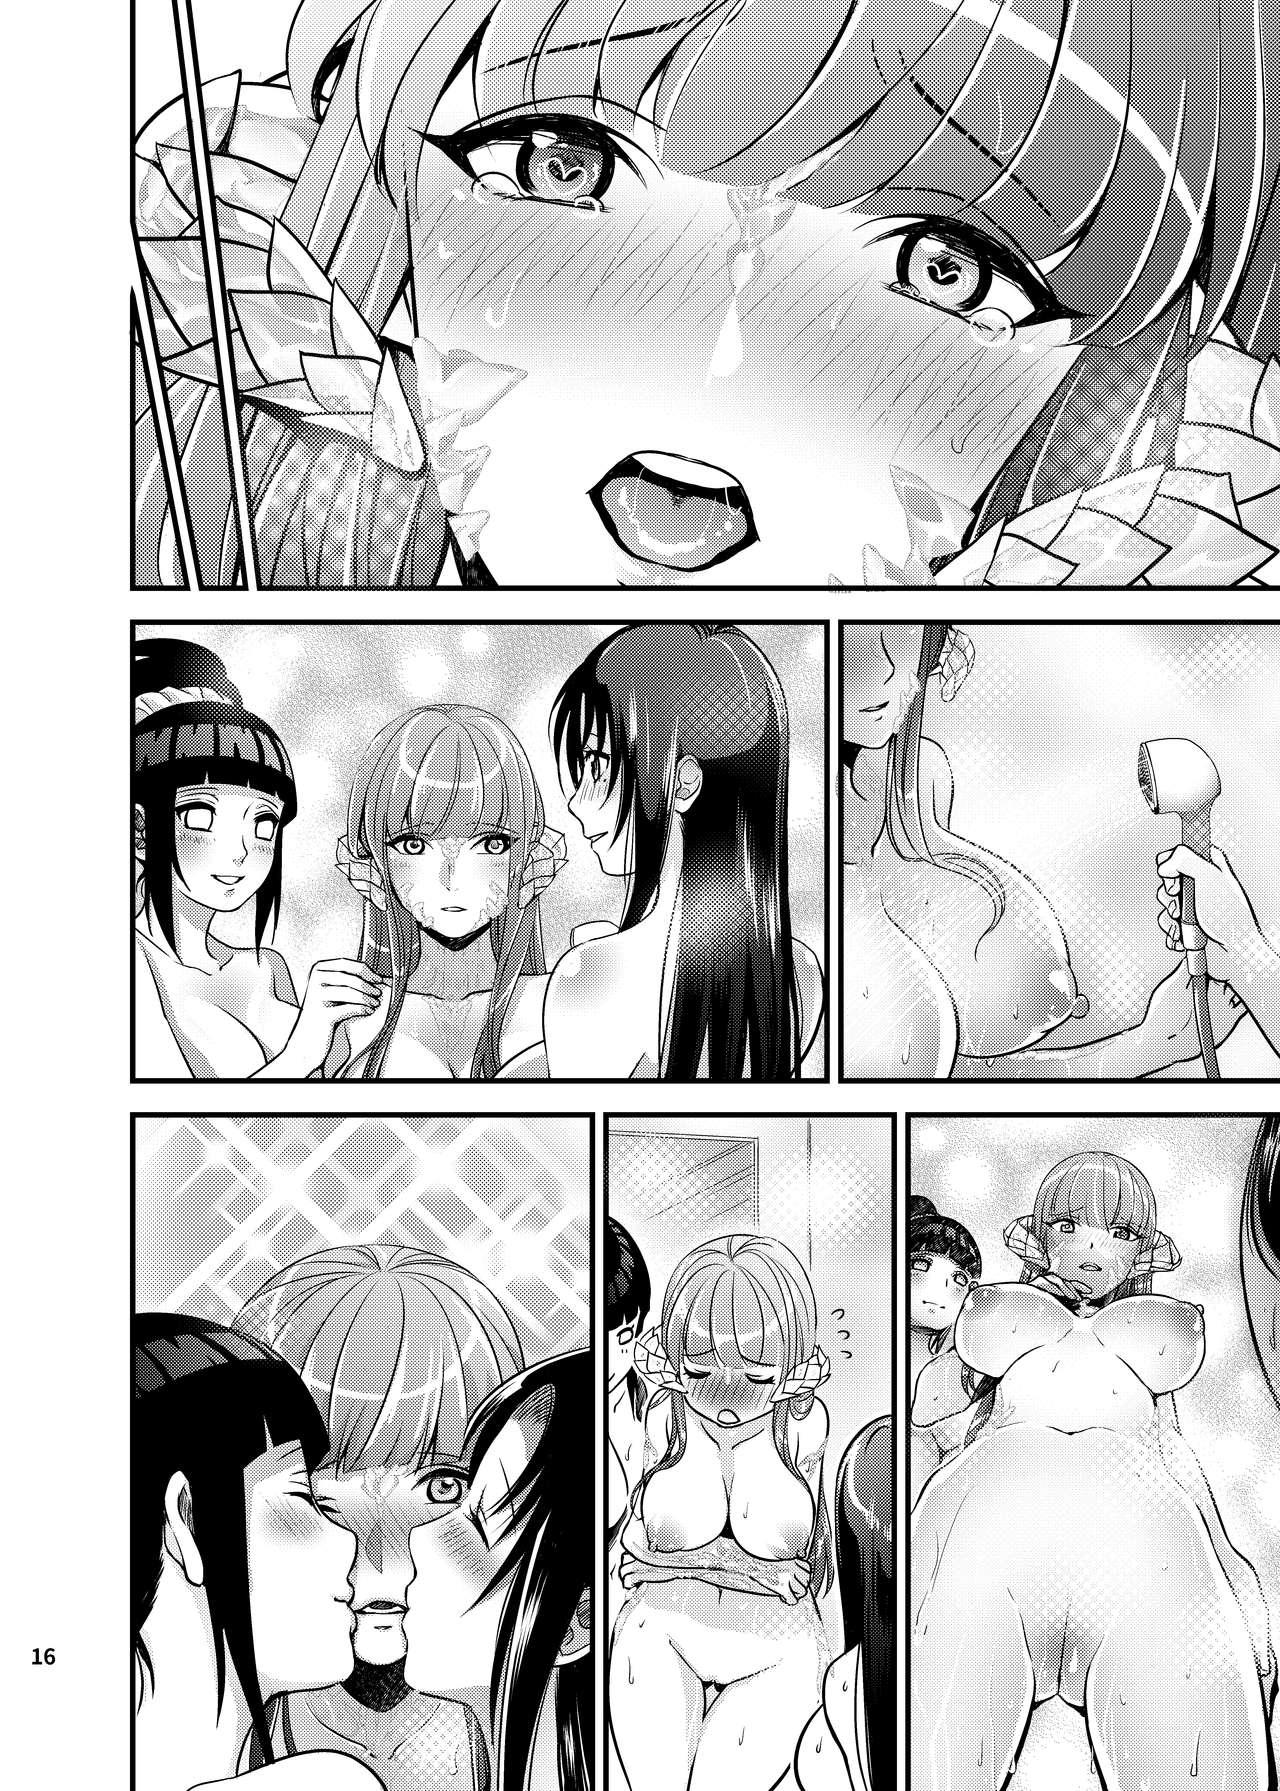 Hot Women Having Sex A Night for girls across the worlds - Naruto Final fantasy xiv Final fantasy Nana to kaoru Brunettes - Page 15